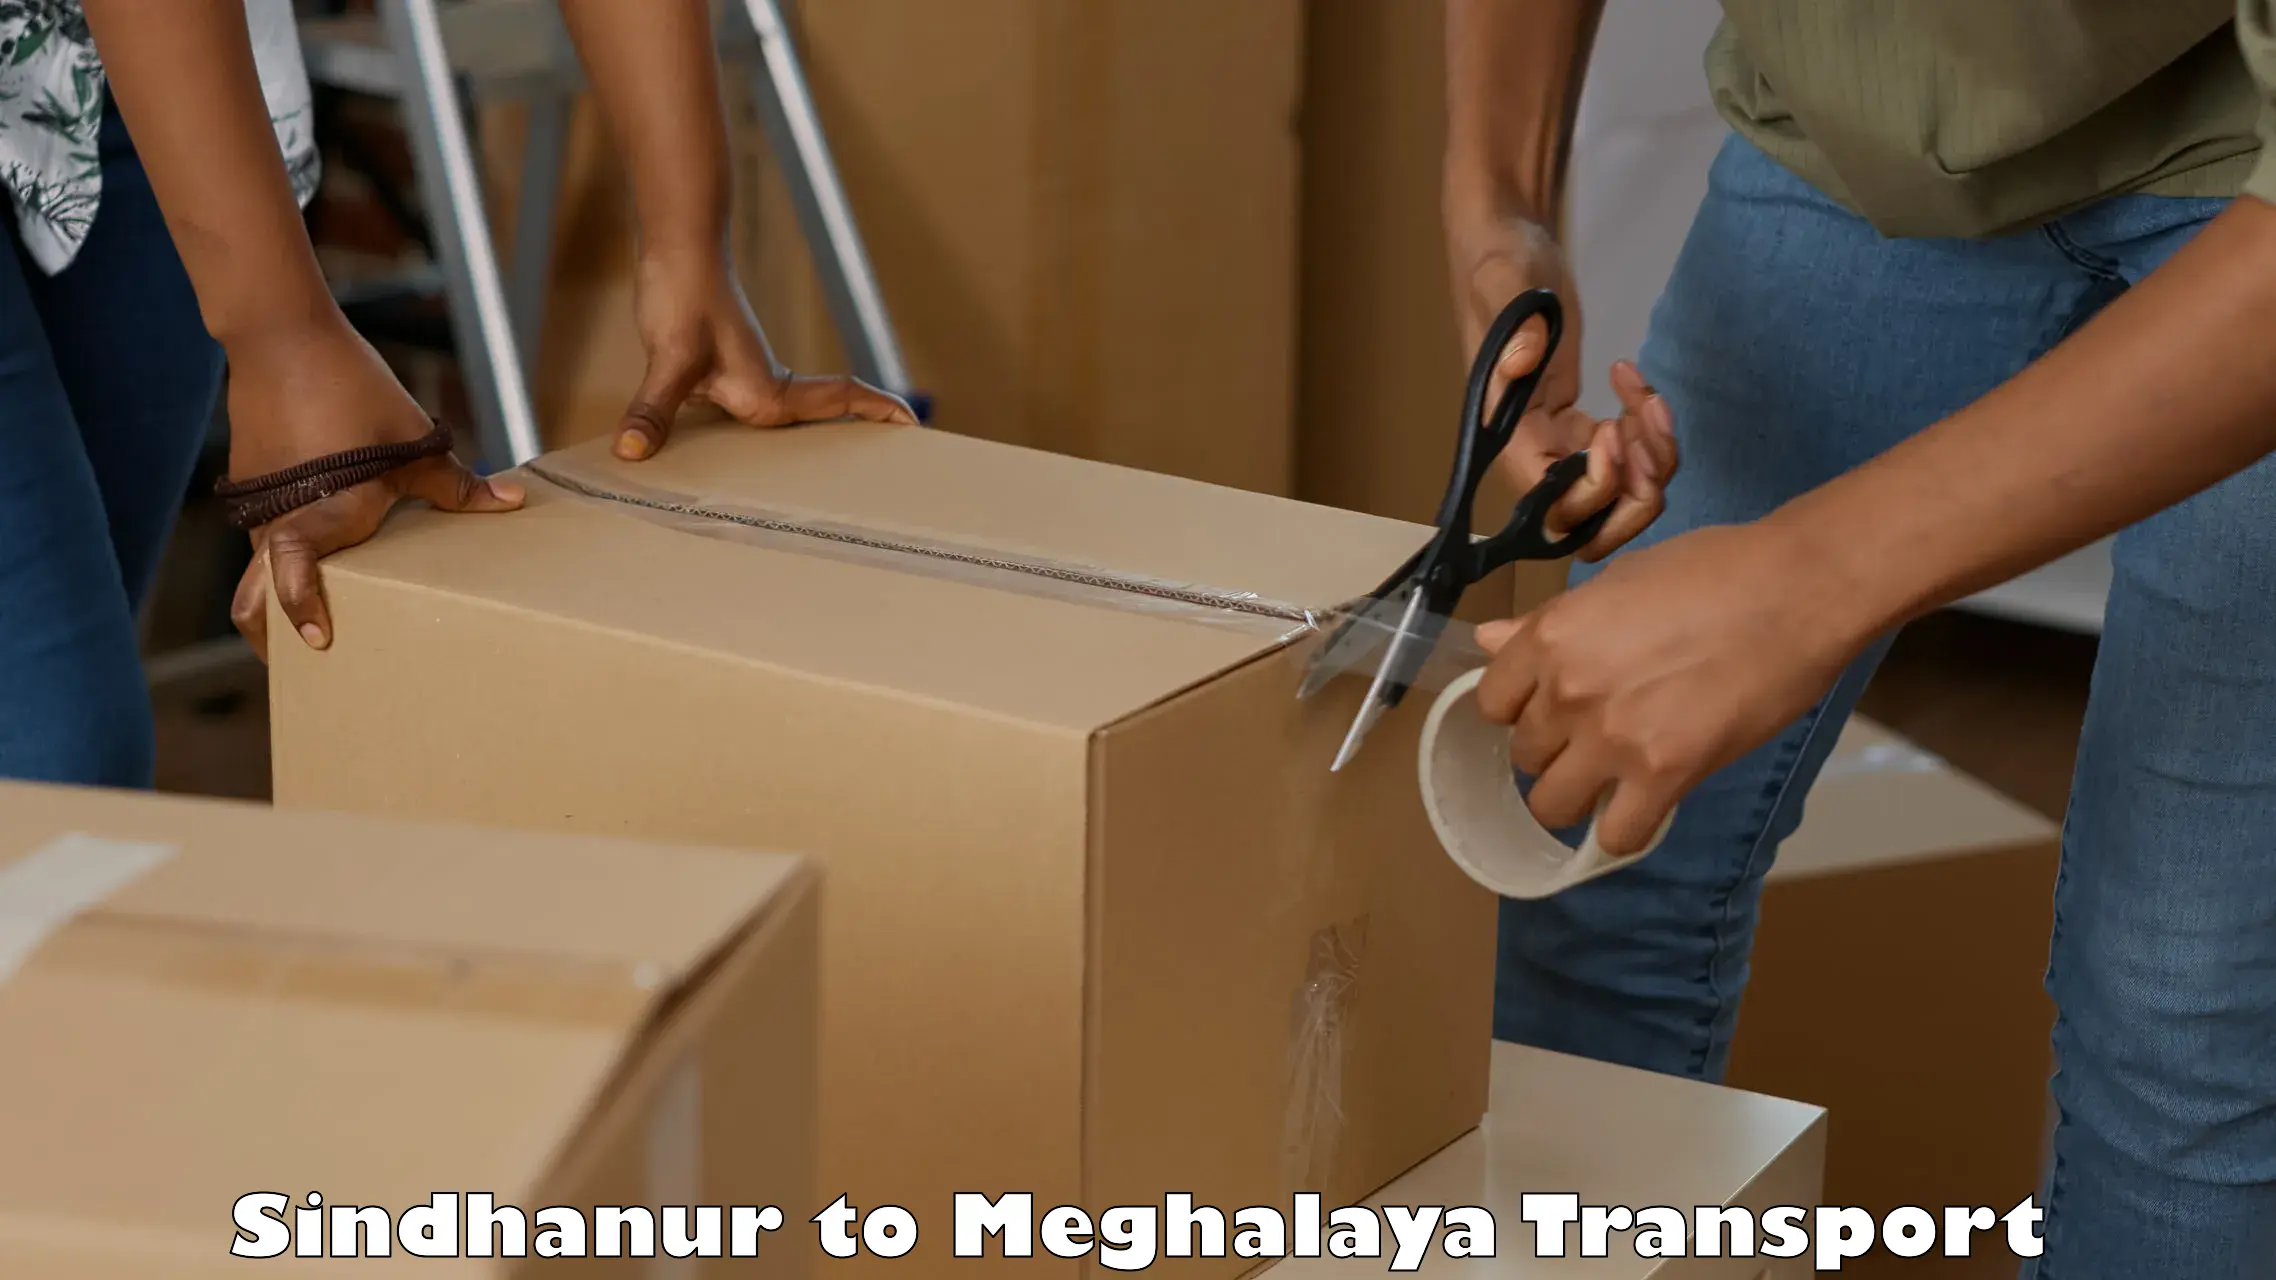 Truck transport companies in India Sindhanur to Meghalaya